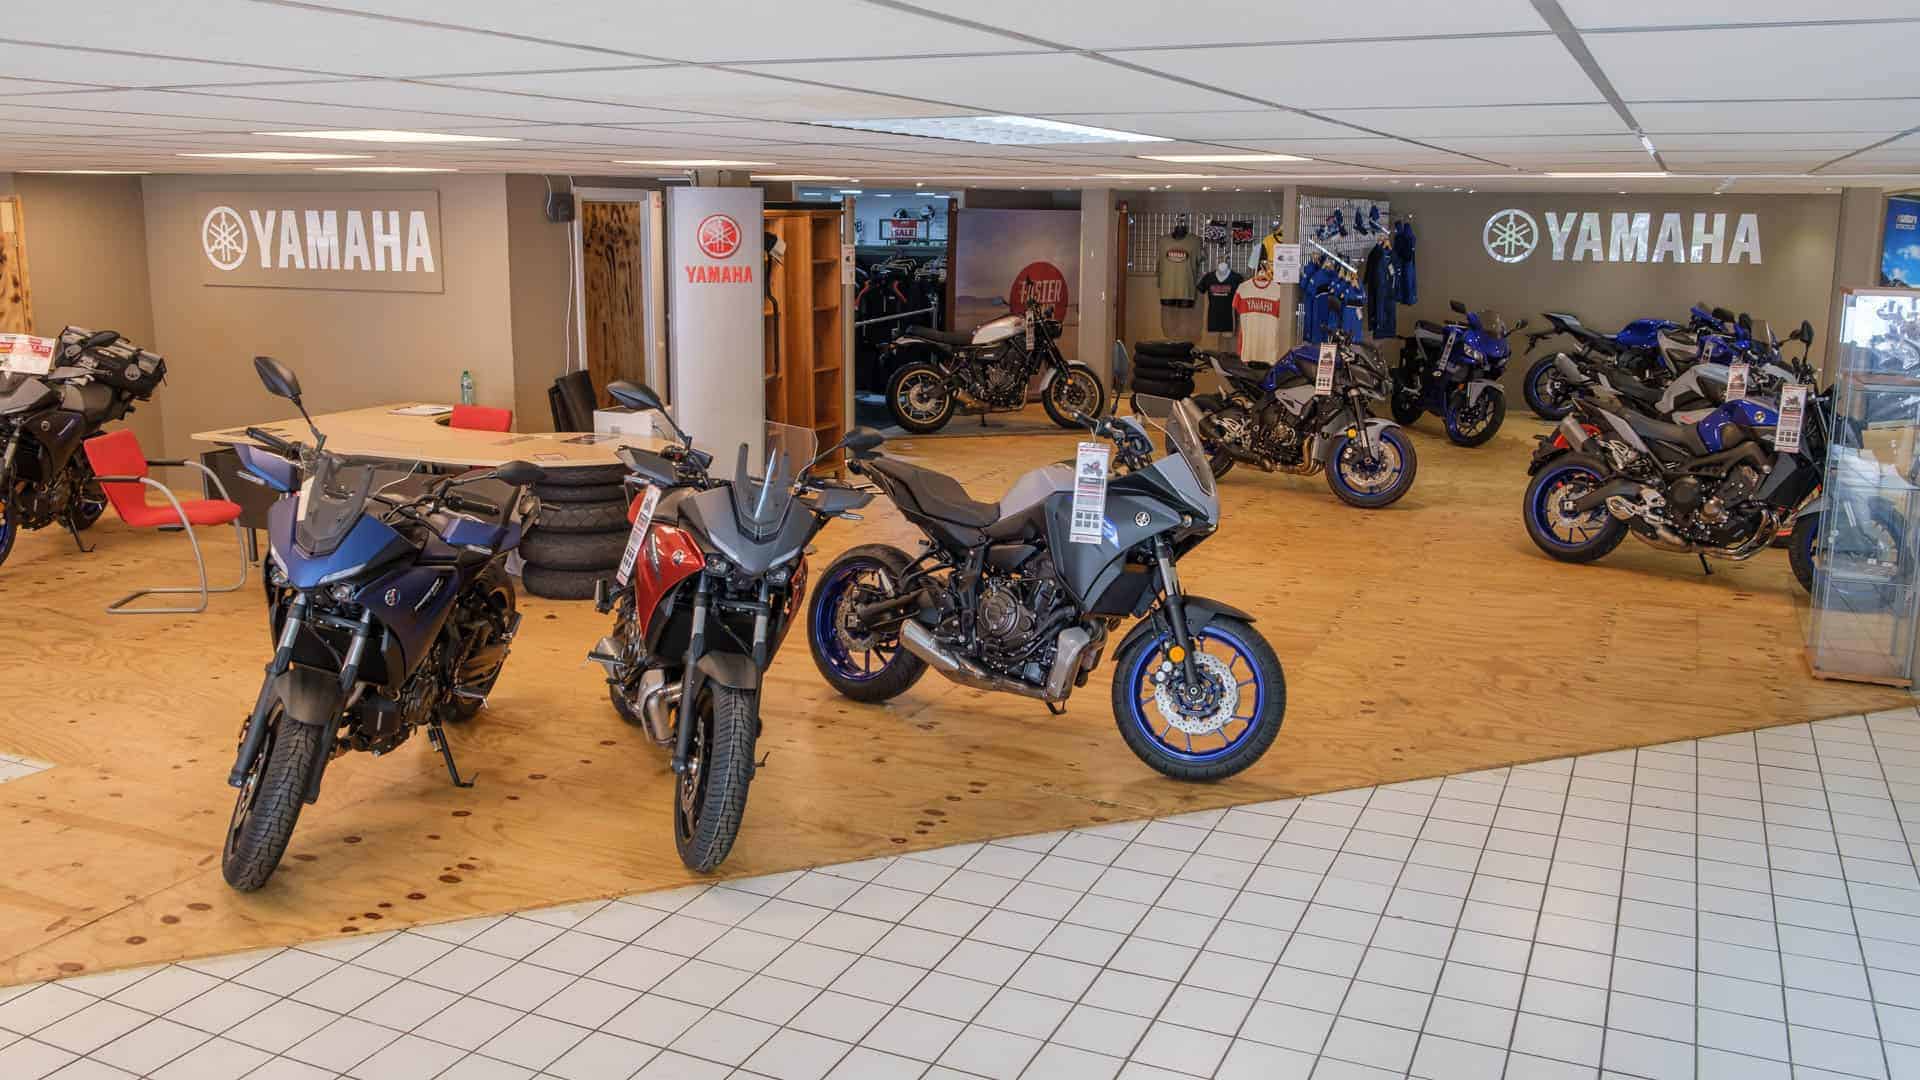 Yamaha motorcycles on display in shop